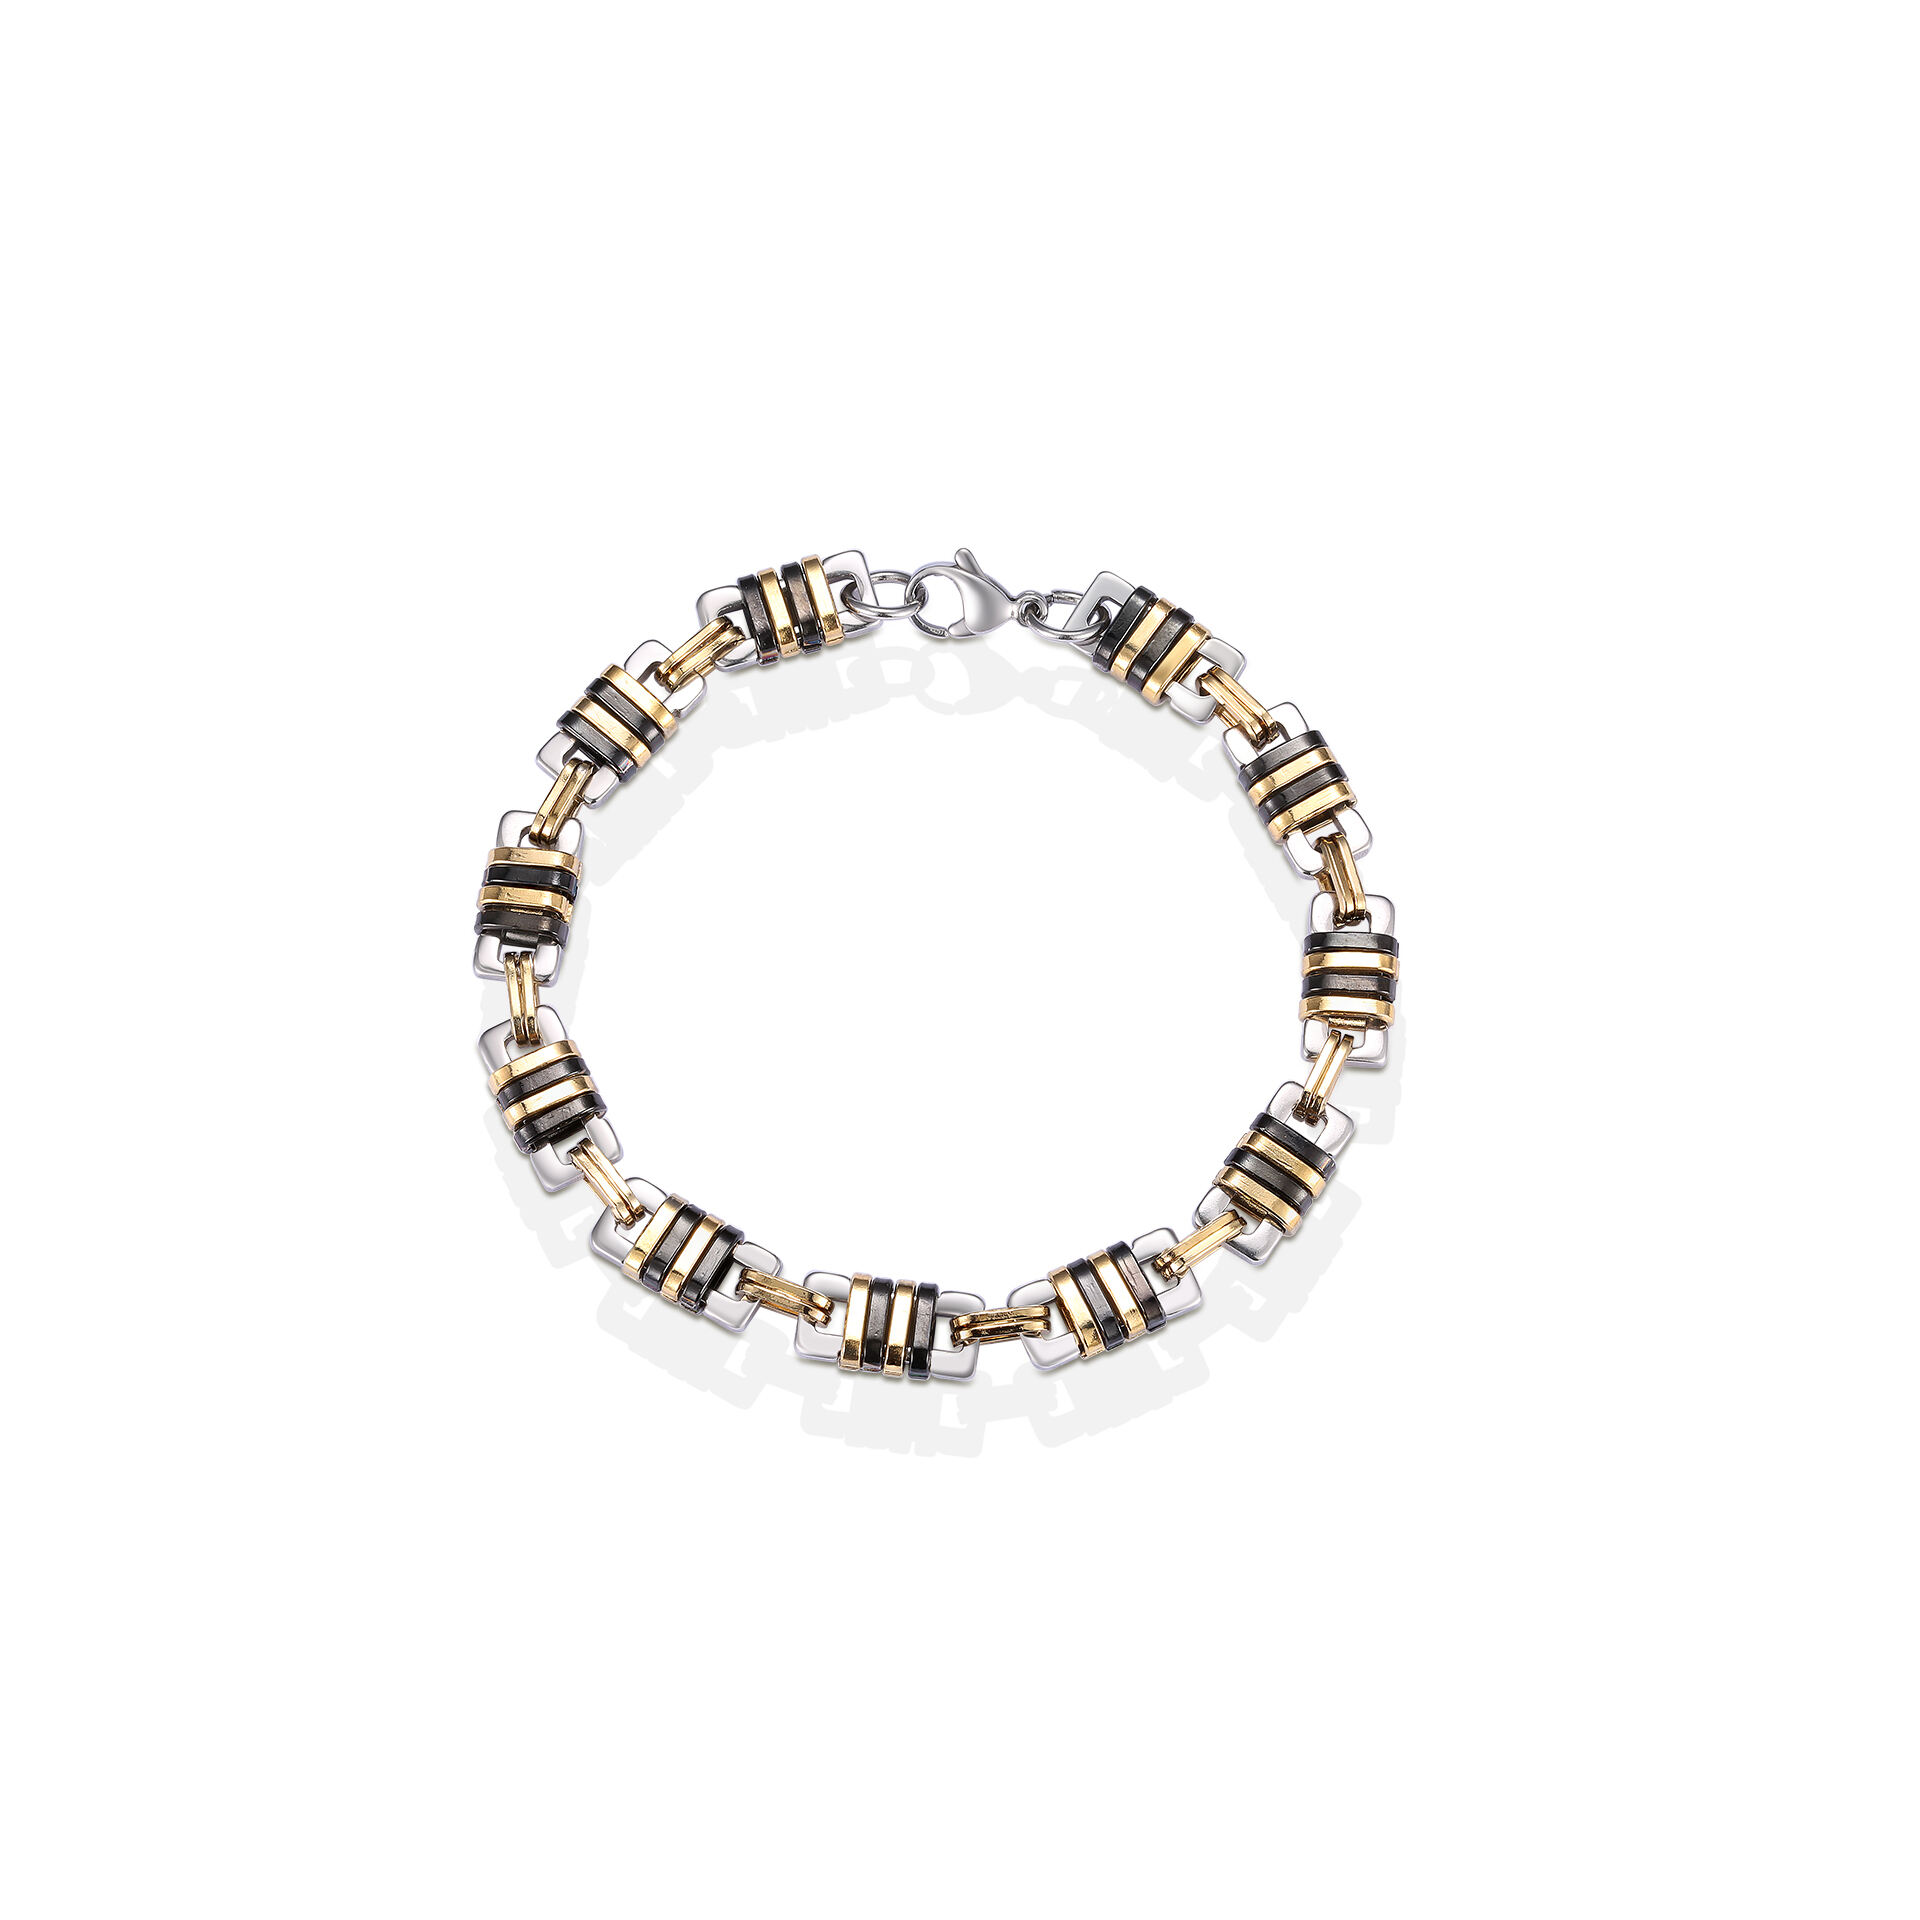 Black and gold lock chain design men's bracelet